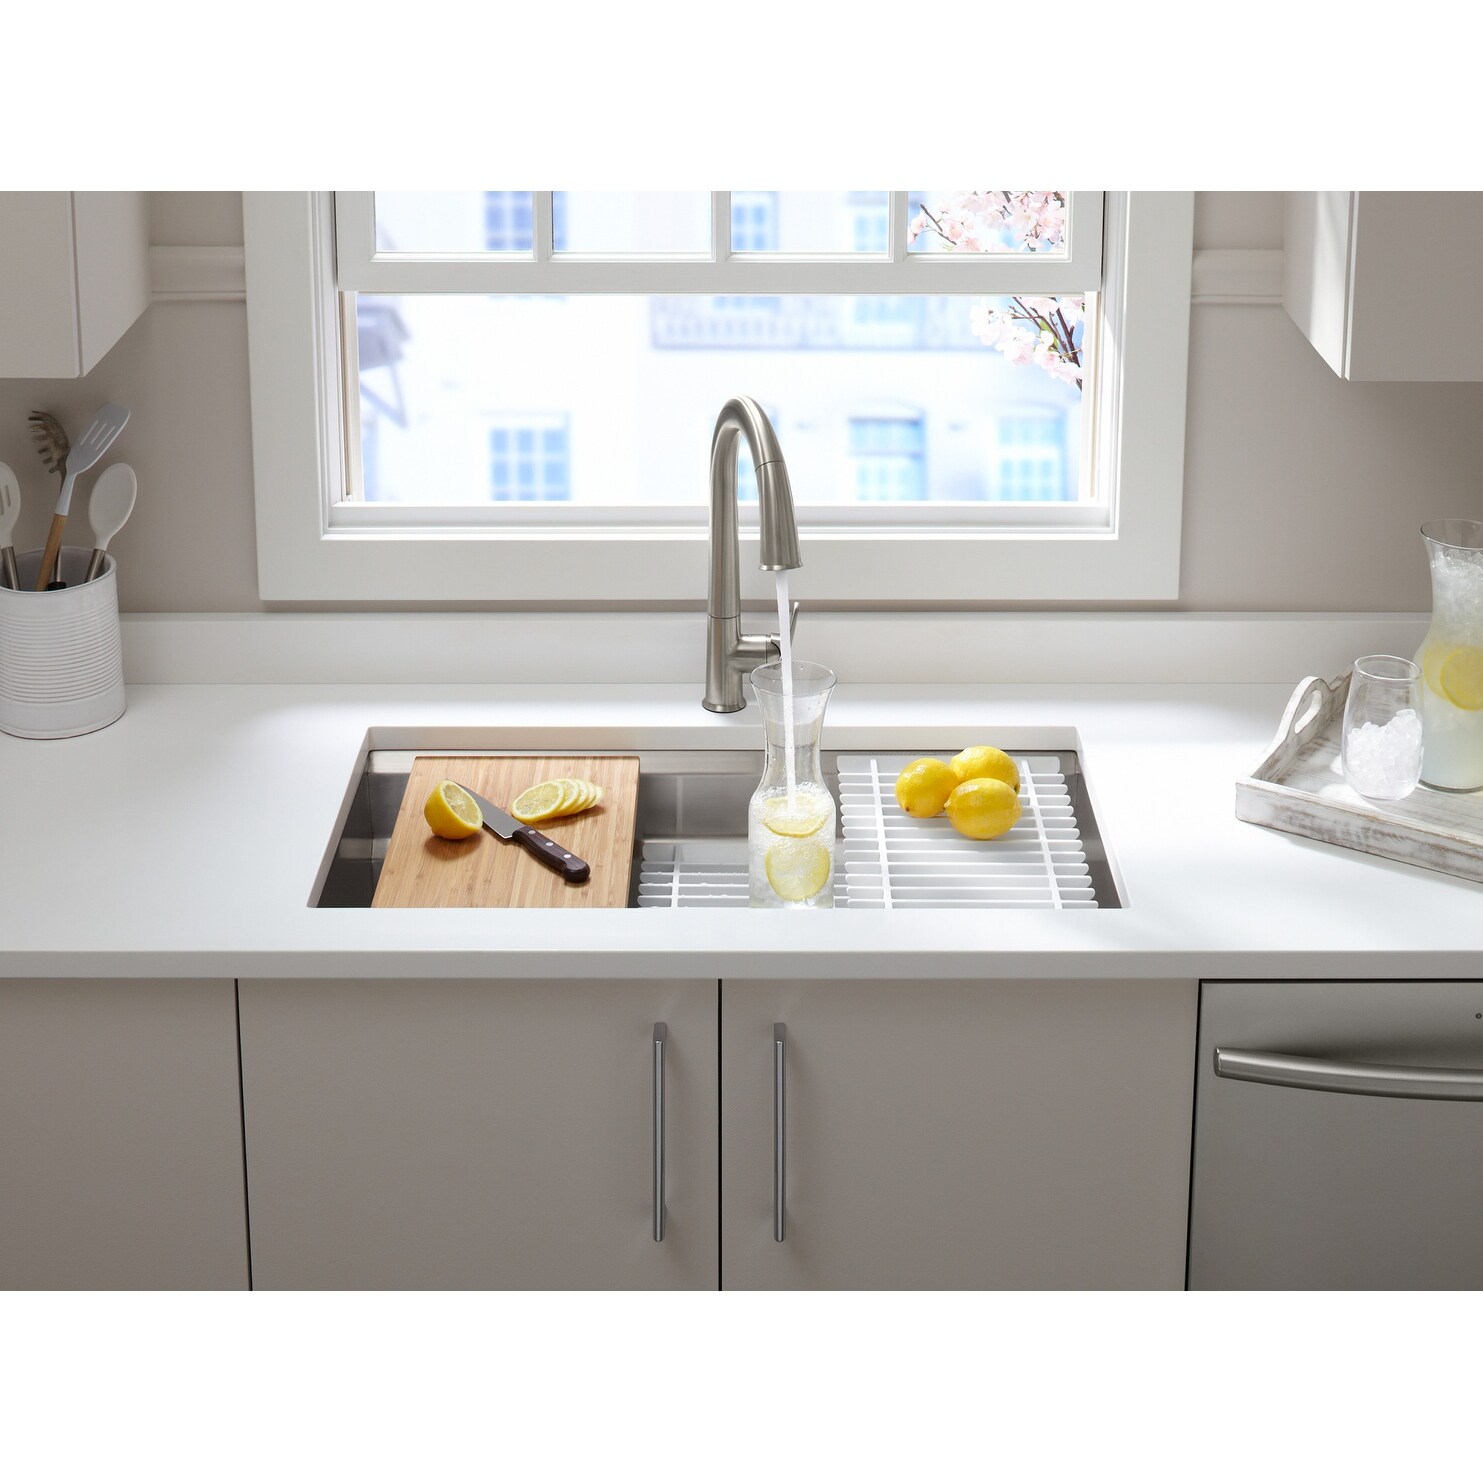 Kohler K 23651 Prolific 29 Undermount Stainless Steel Single Basin Kitchen Sink With Silentshield Technology Bamboo Cutting